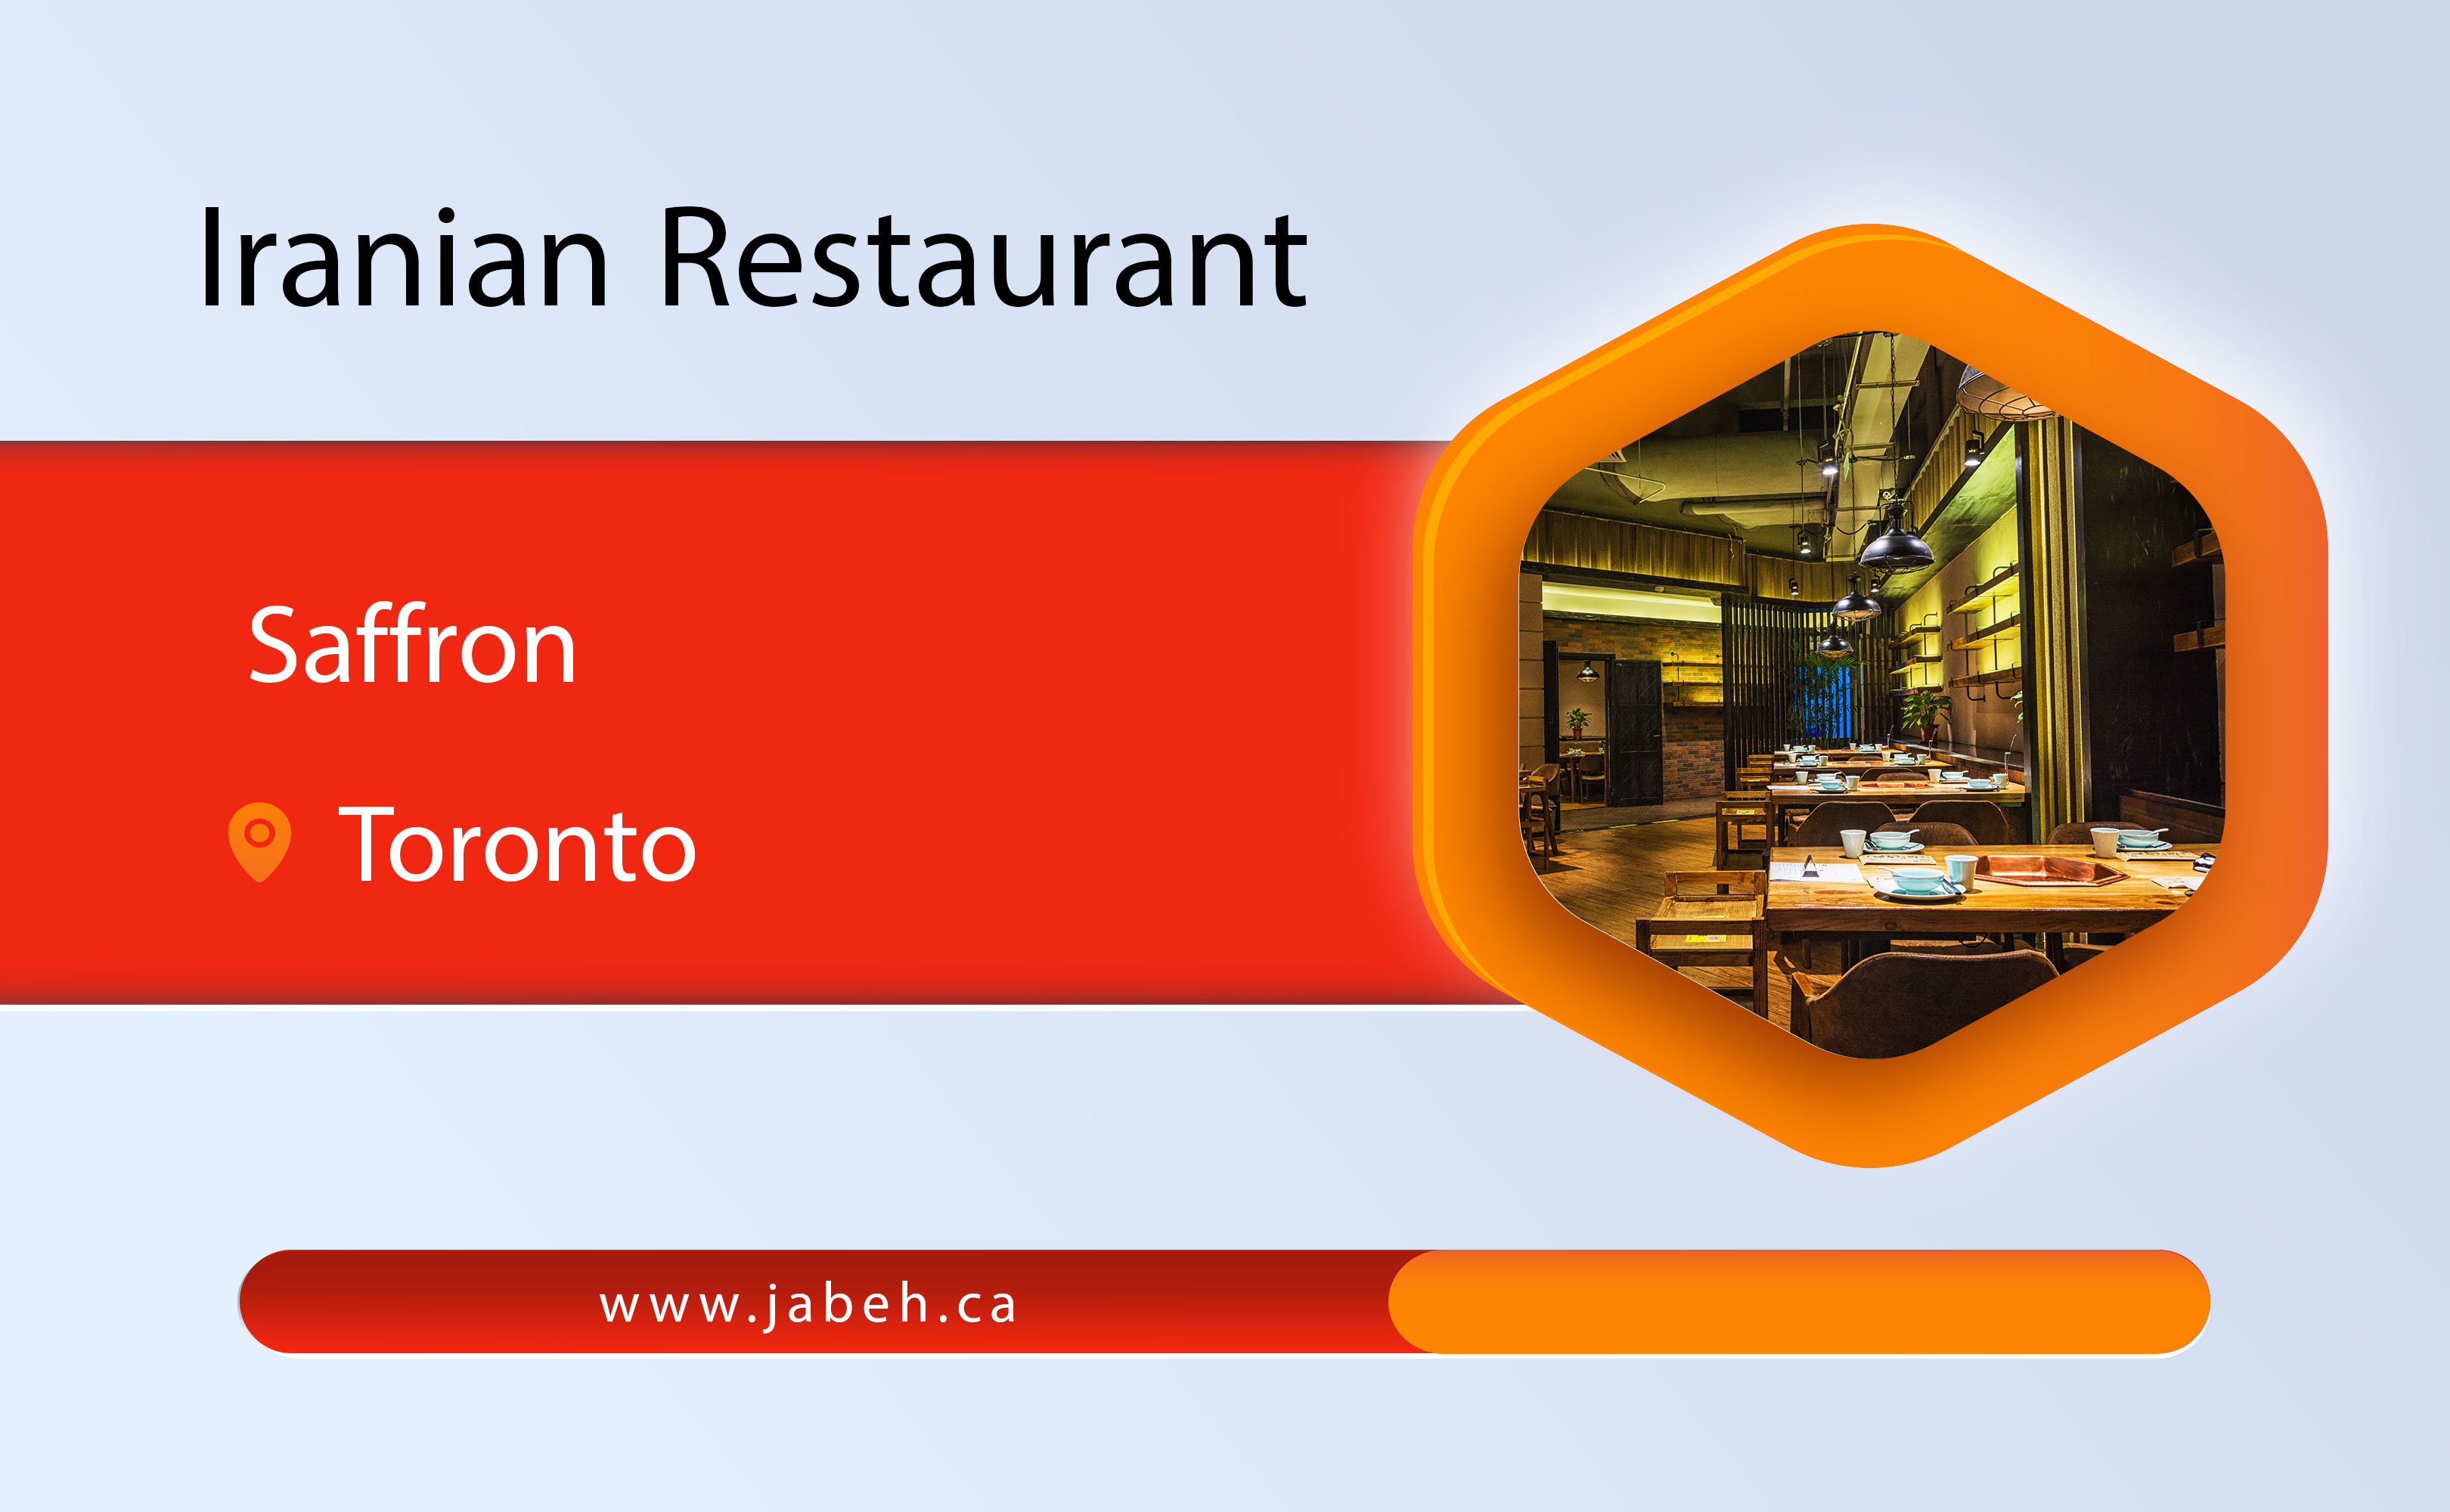 Saffron Iranian restaurant in Toronto